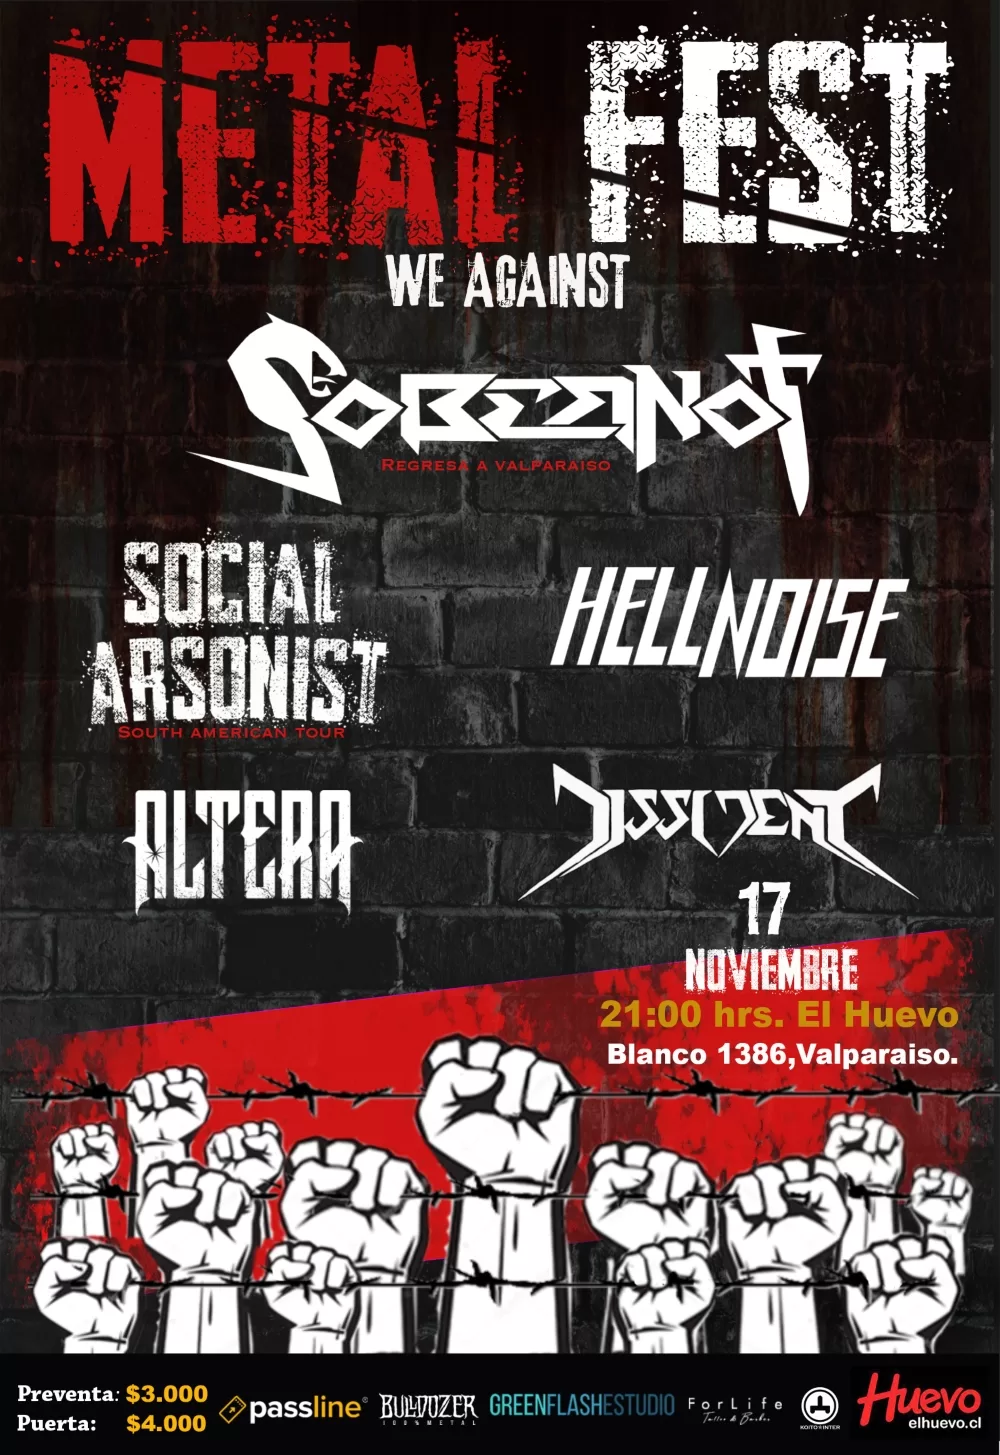 Metal Fest We Against Sobernot